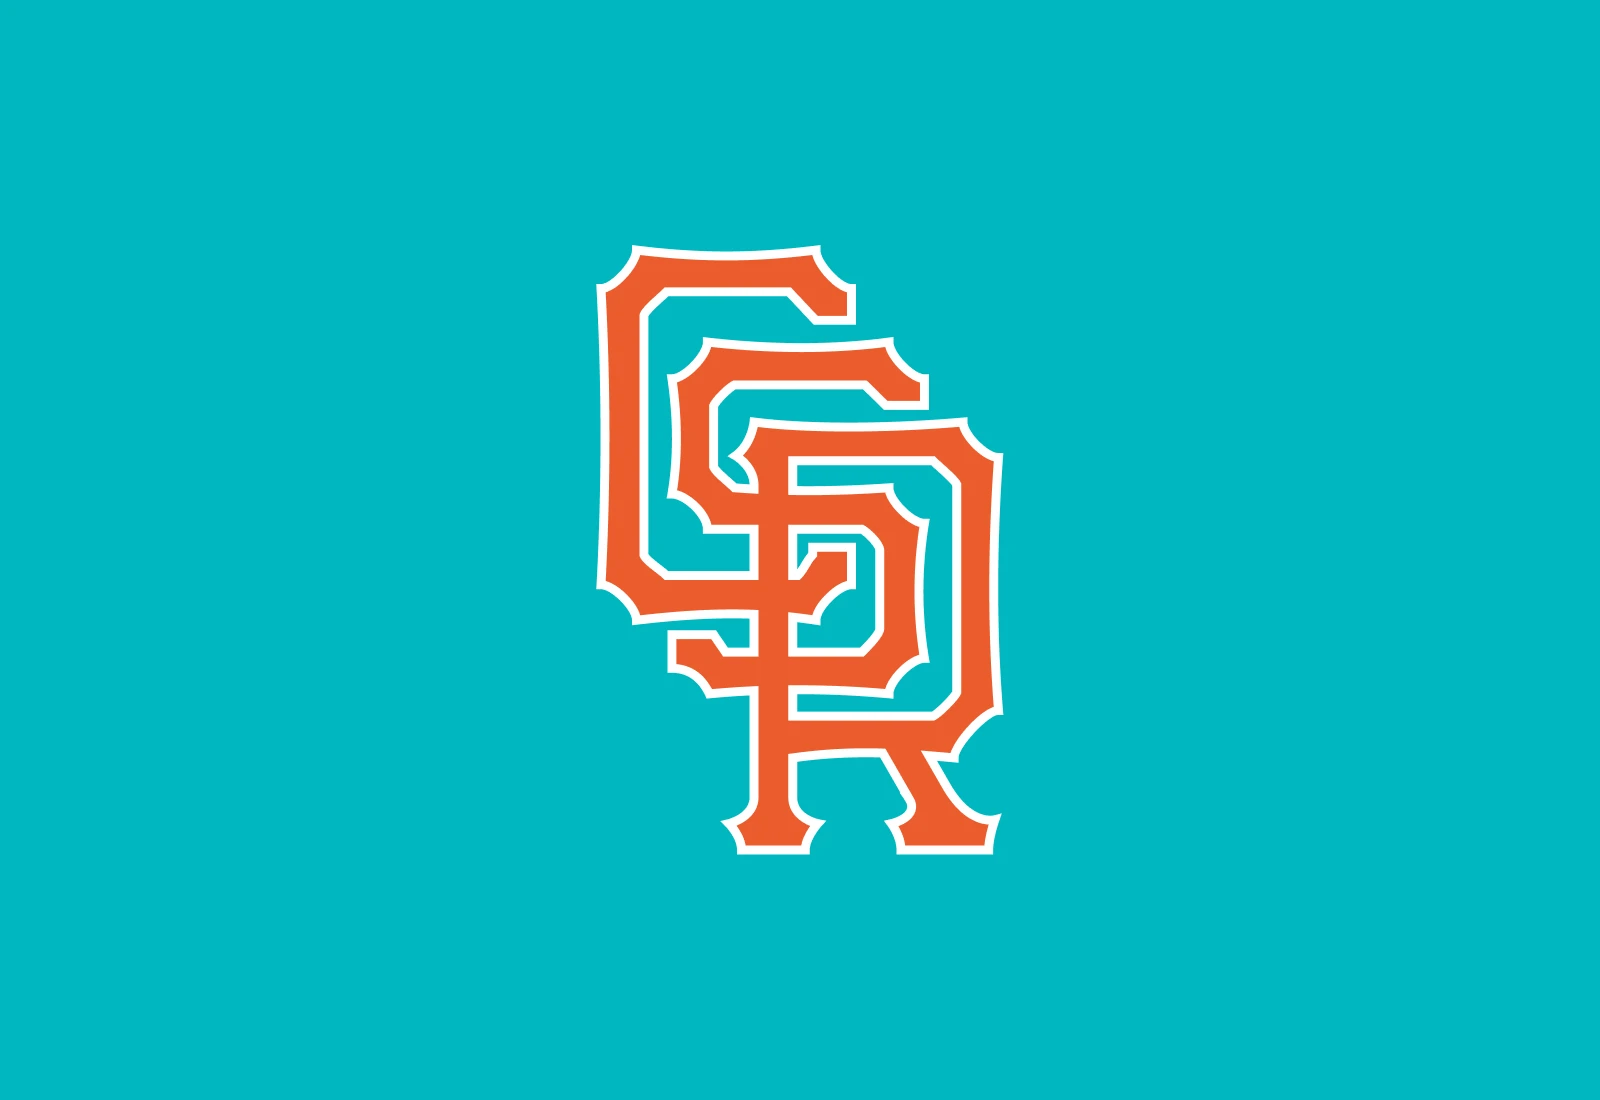 Crete St Riot - CSR Monogram inspired by SF Giants